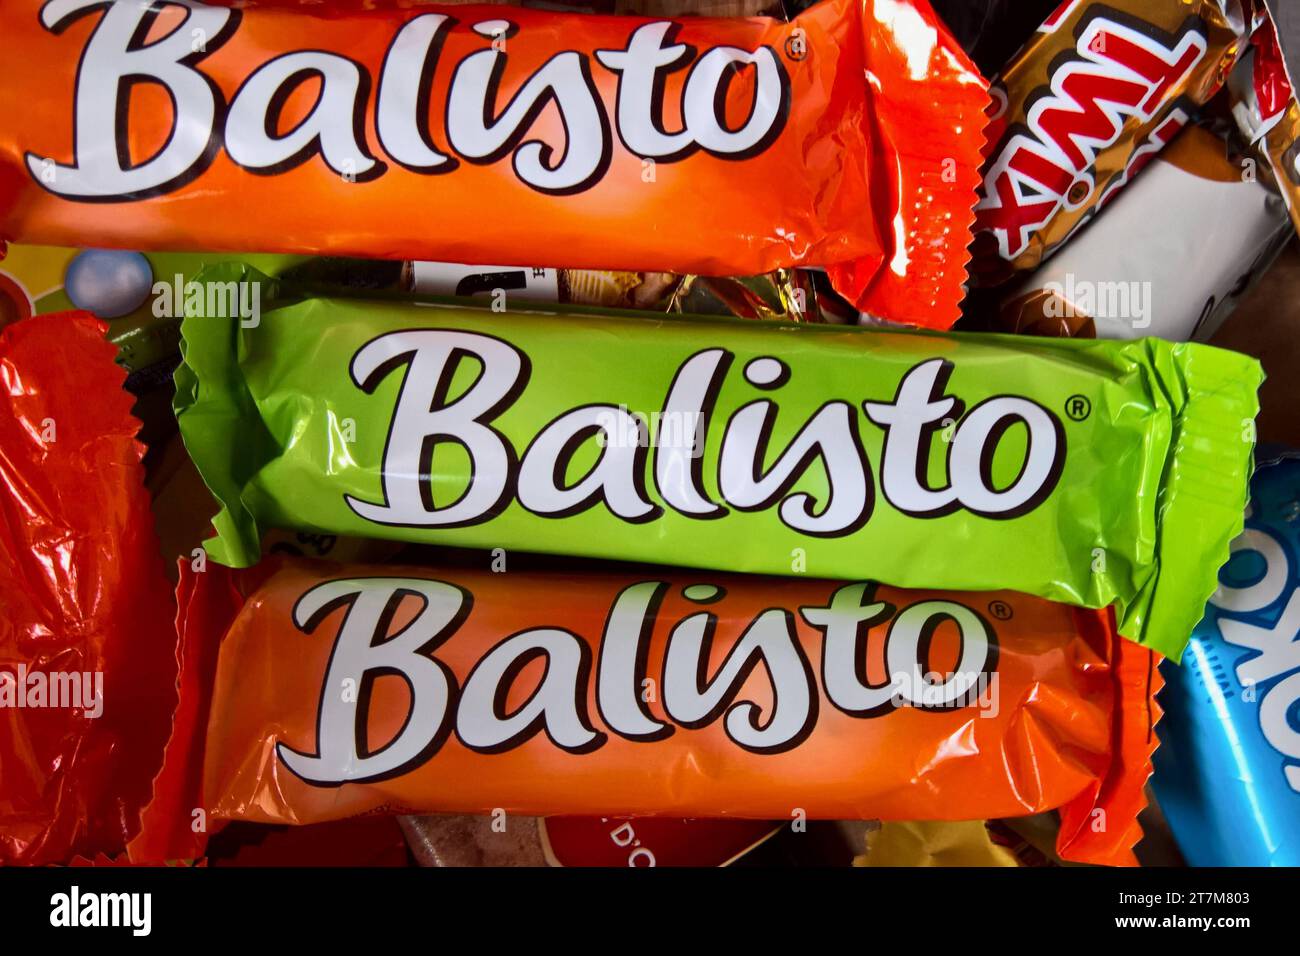 Balisto®  Mars, Incorporated